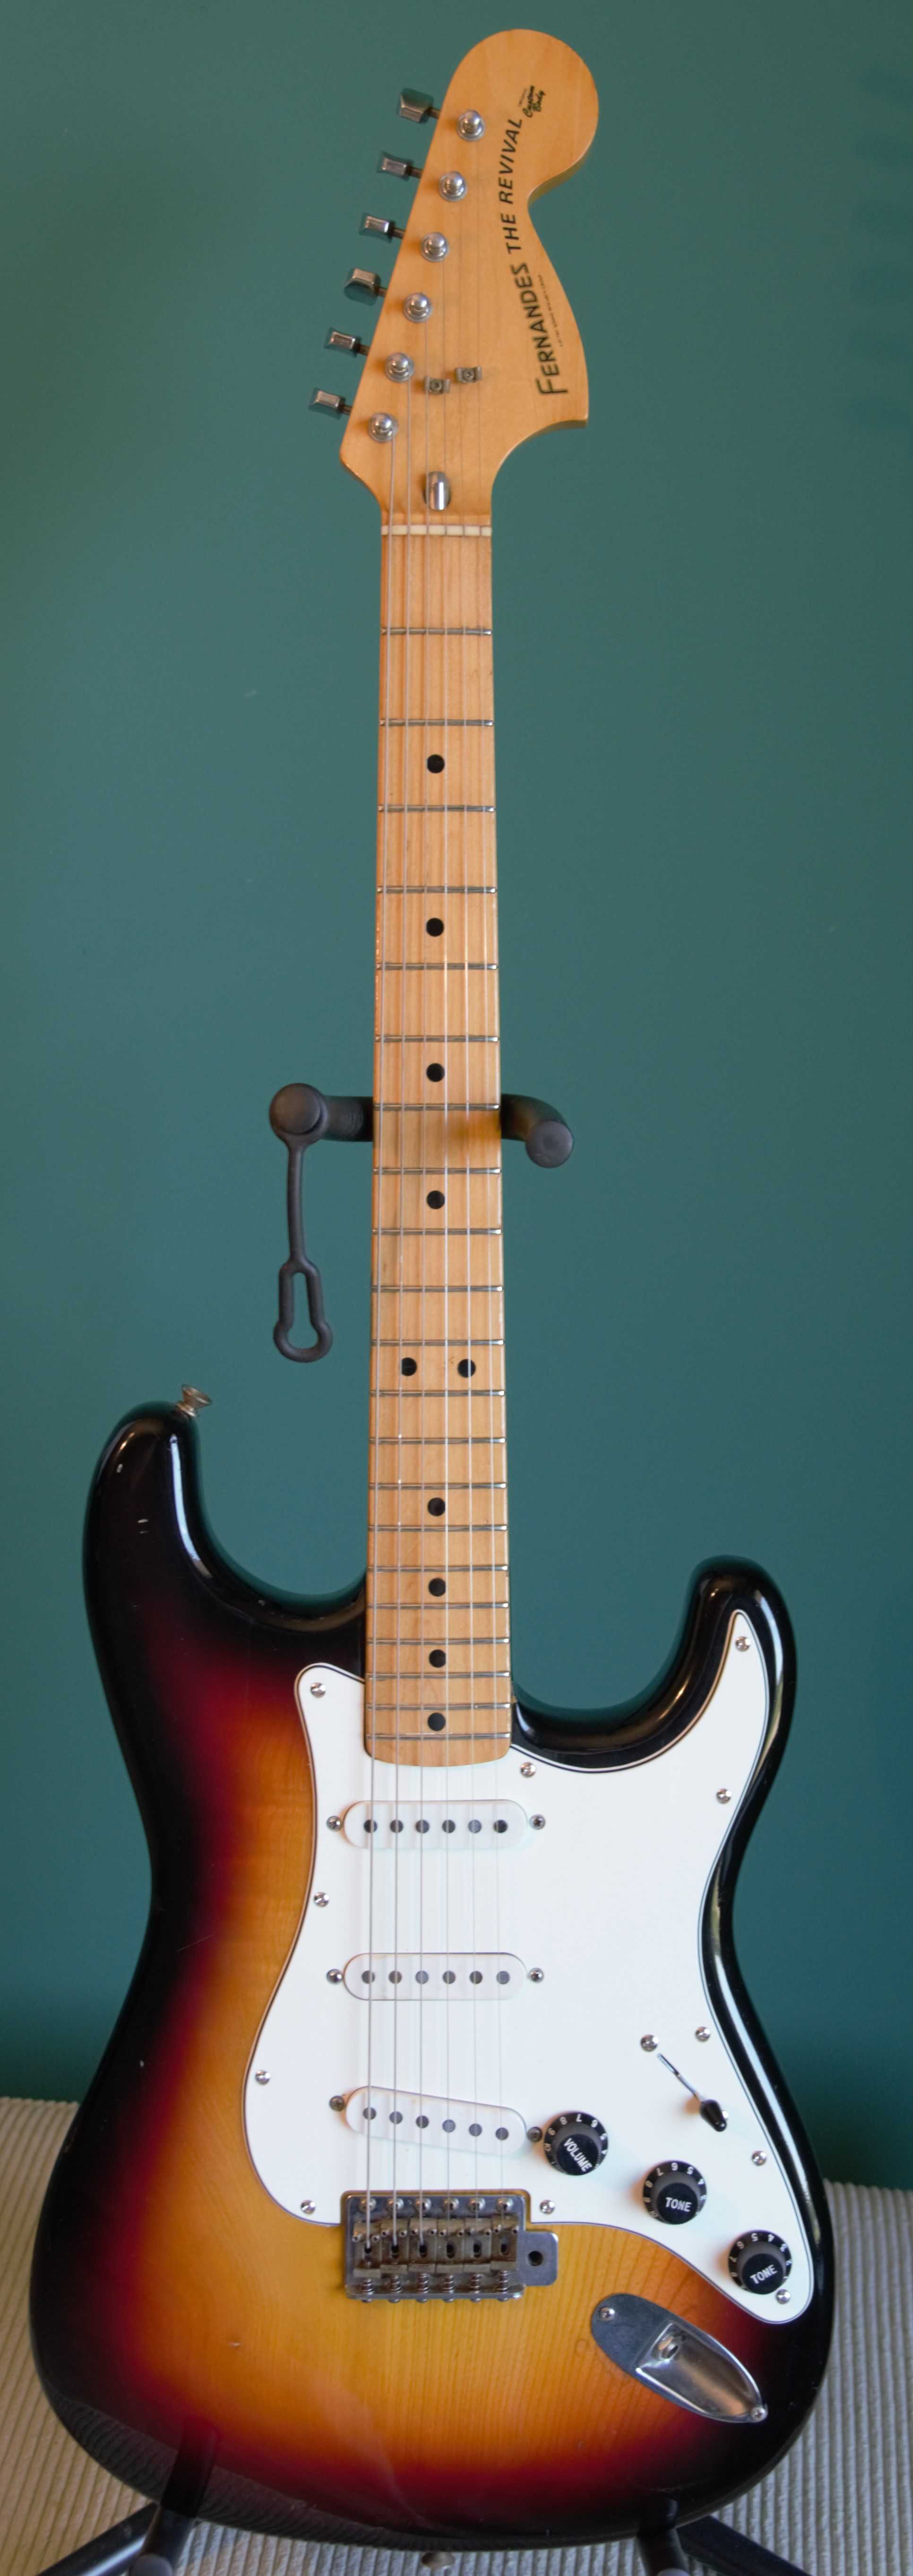 Stratocaster Fernander the Revival 1980, made in japan (nie Fender)